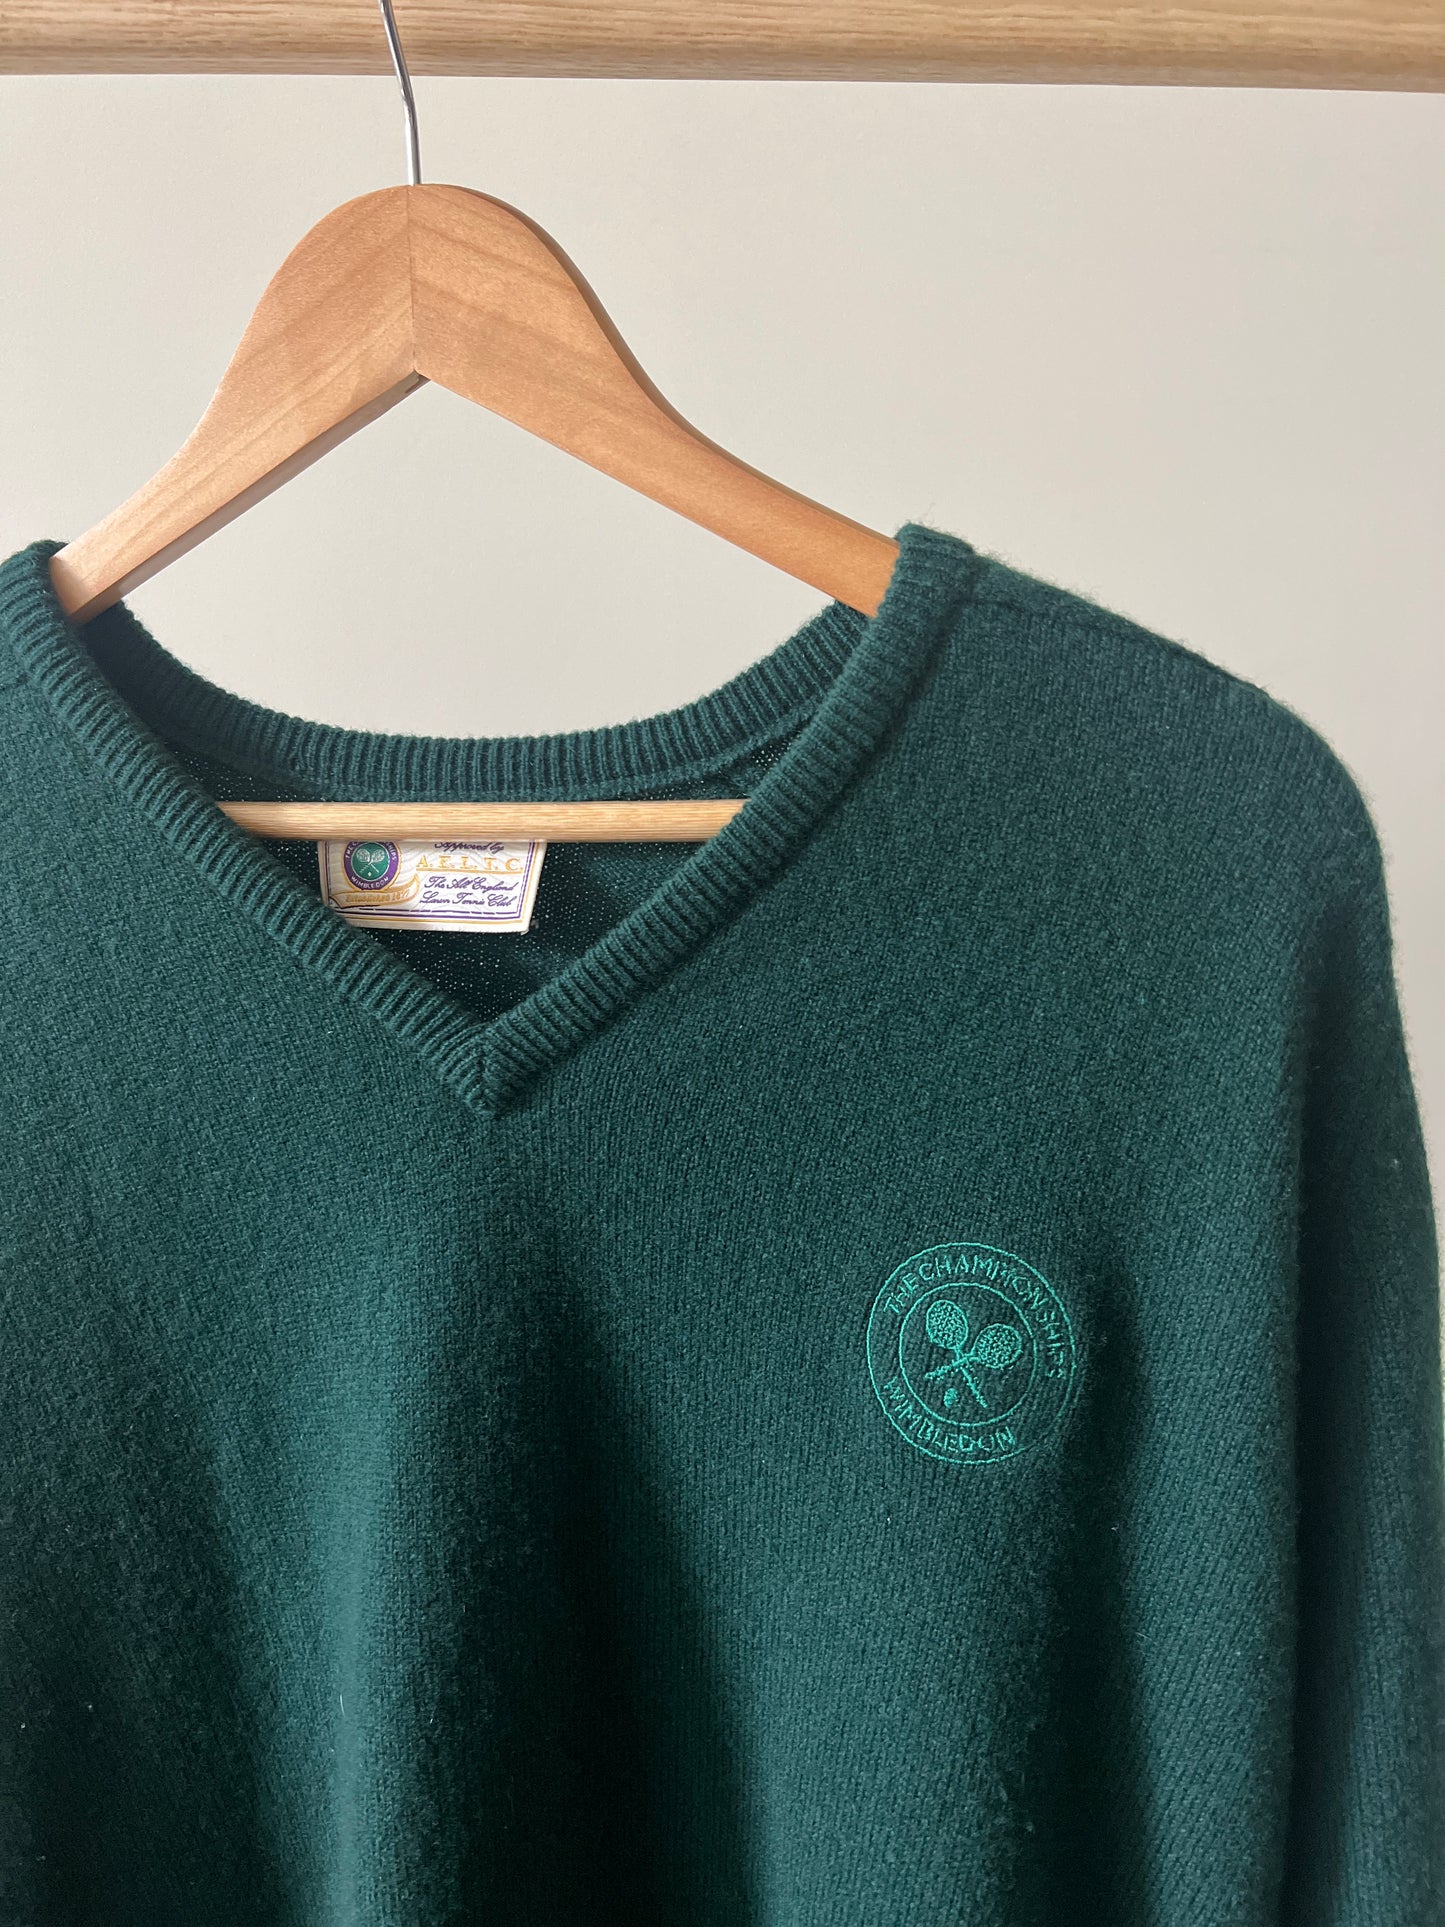 Vintage Wool Wimbledon Sweater (circa 1990s)